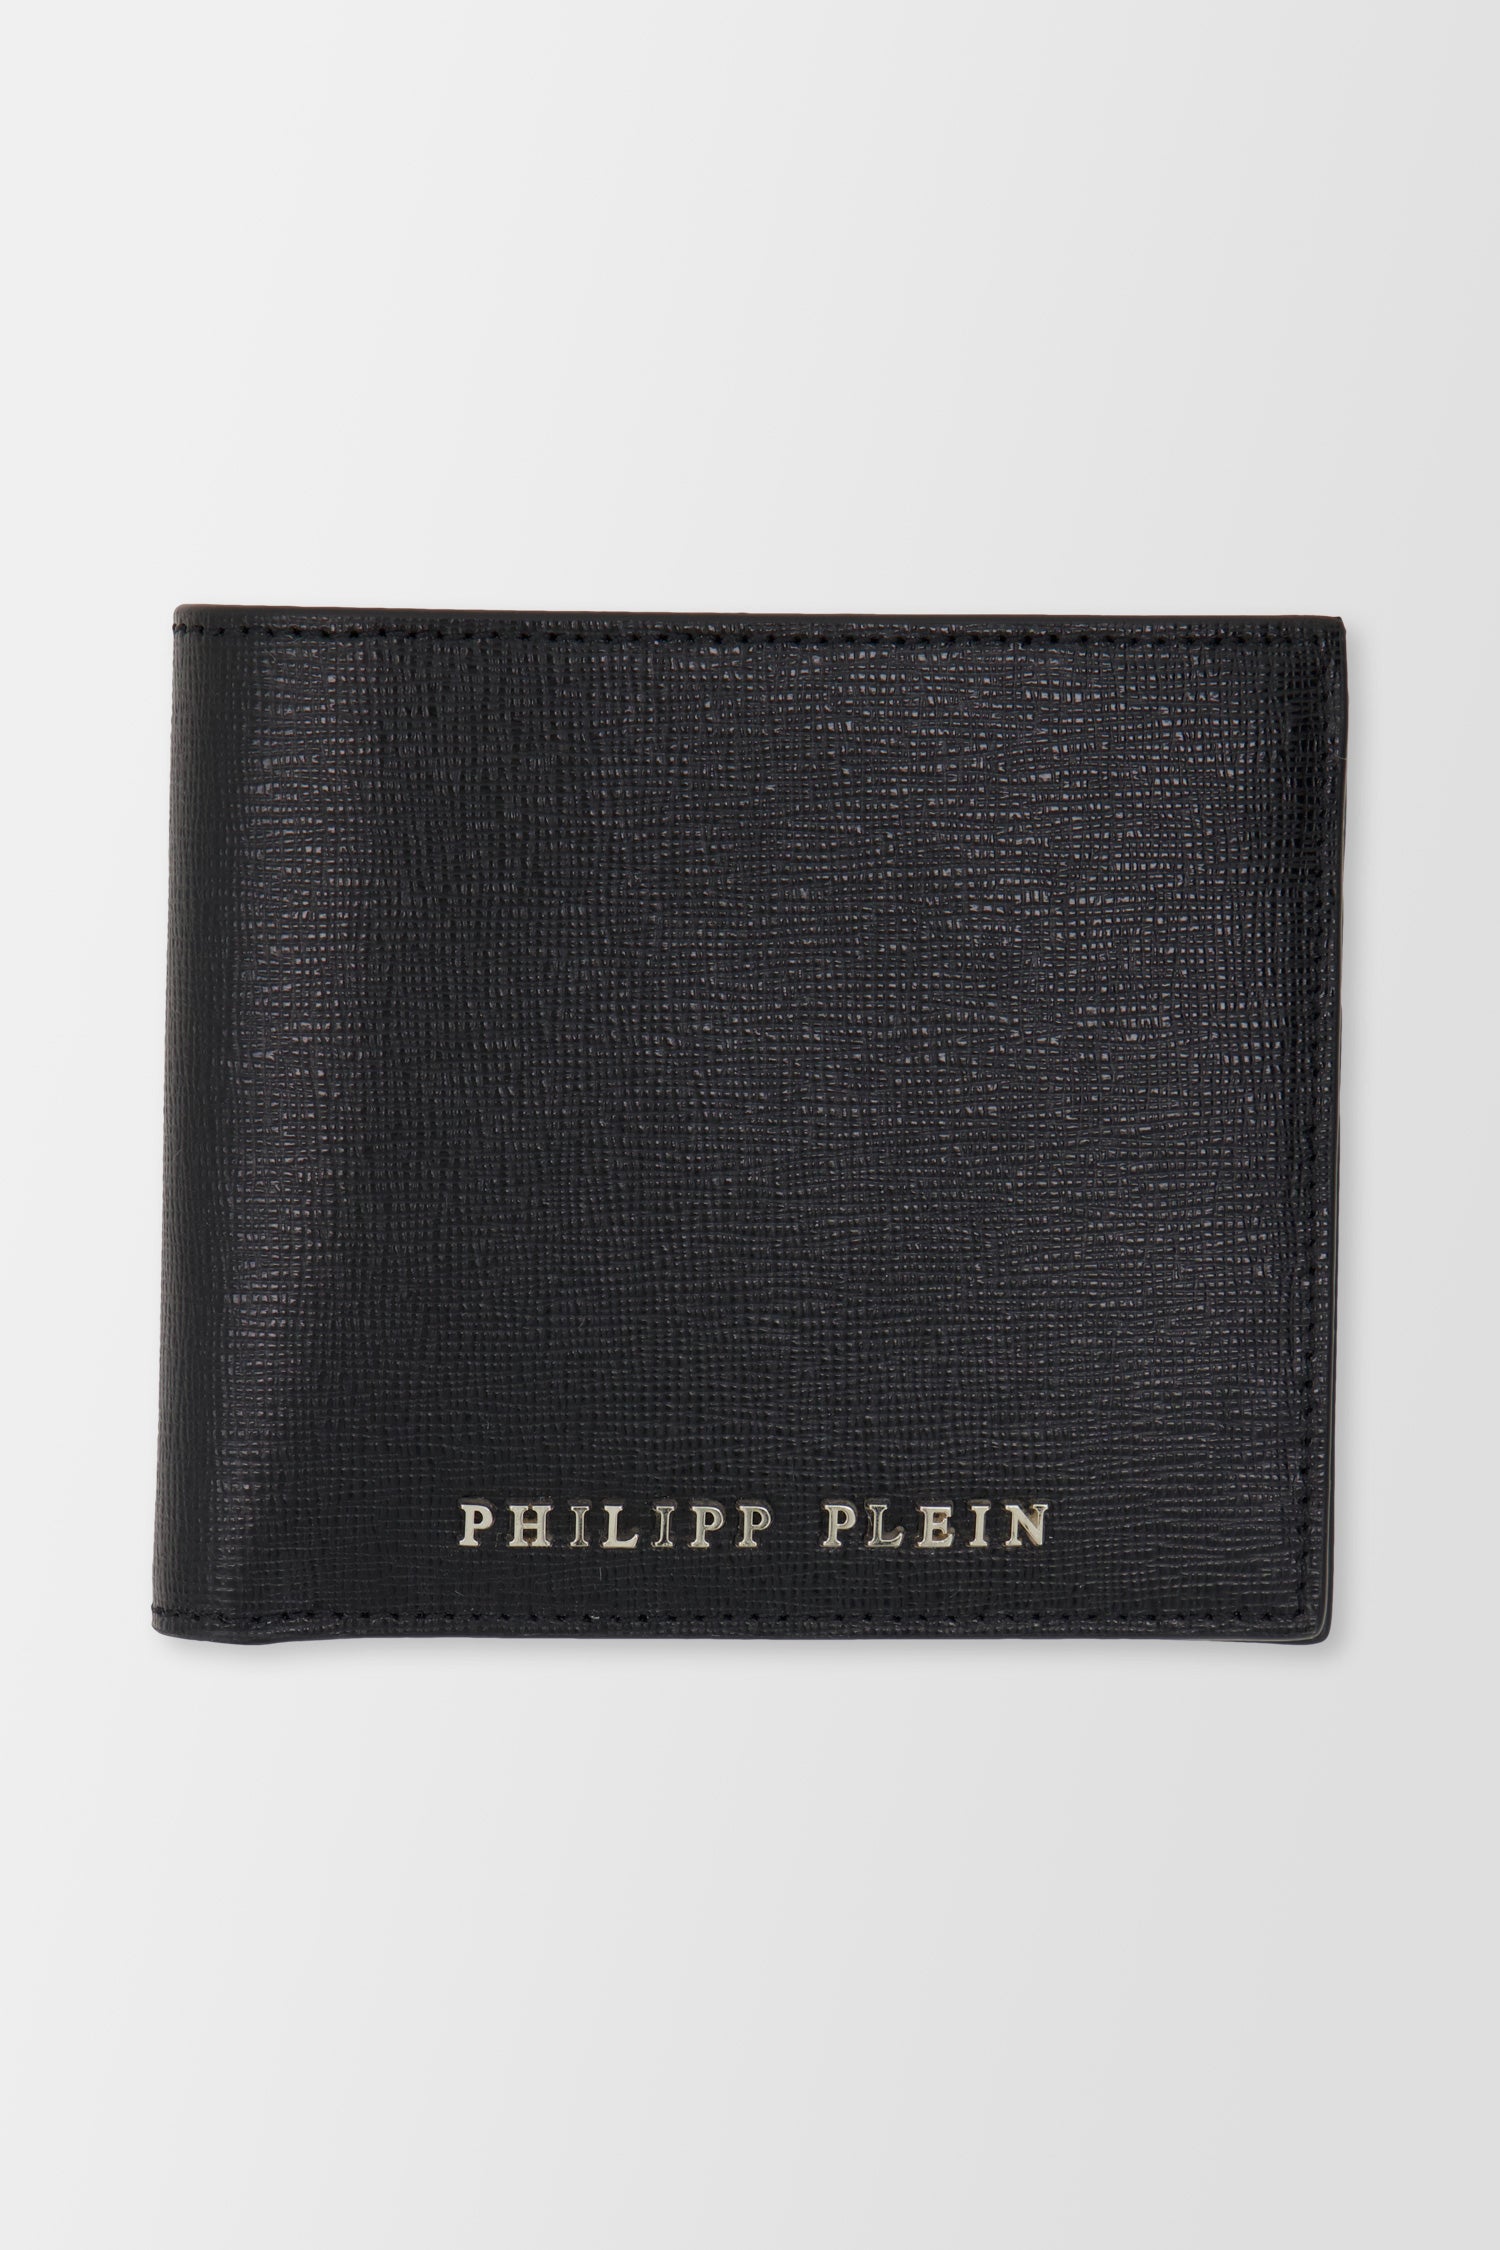 Philipp Plein French Wallet